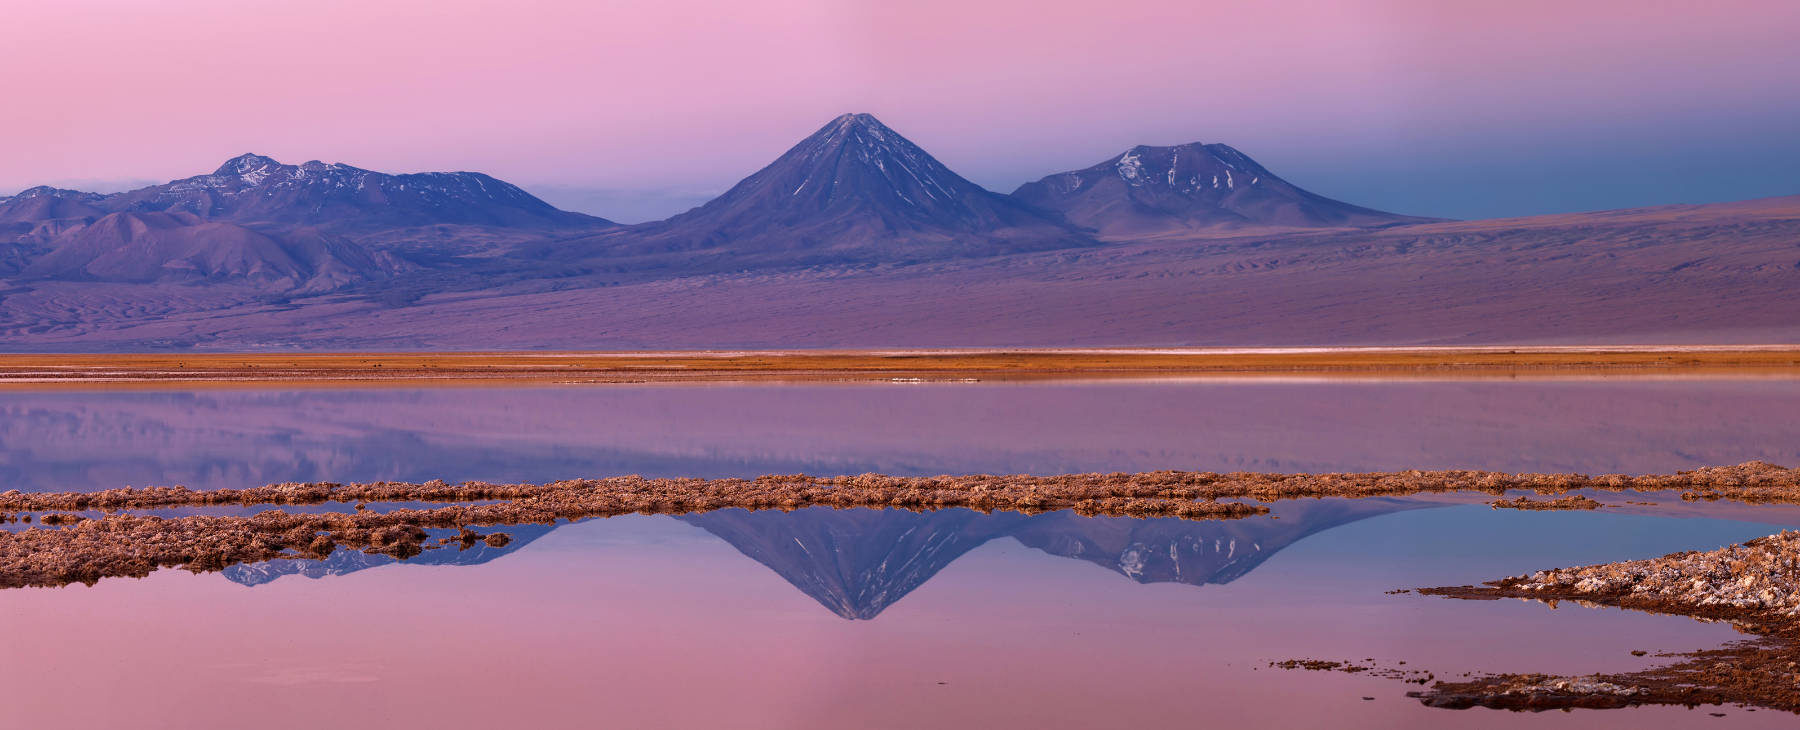 Luxusrundreise Chile_Atacama